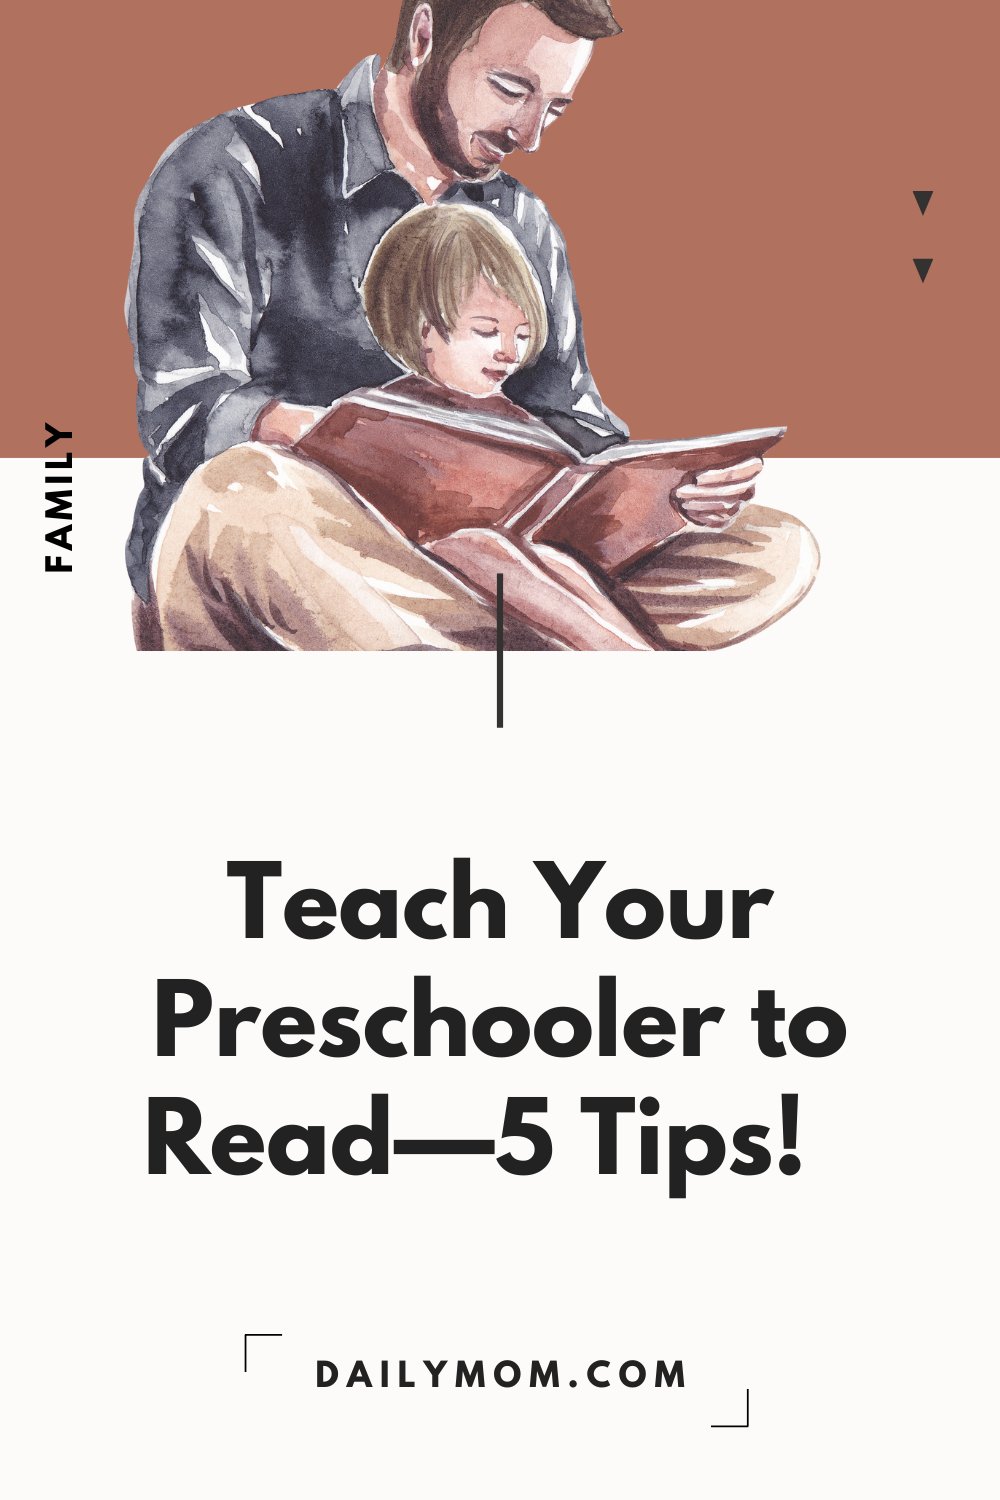 Daily Mom Parent Portal Preschool Reader